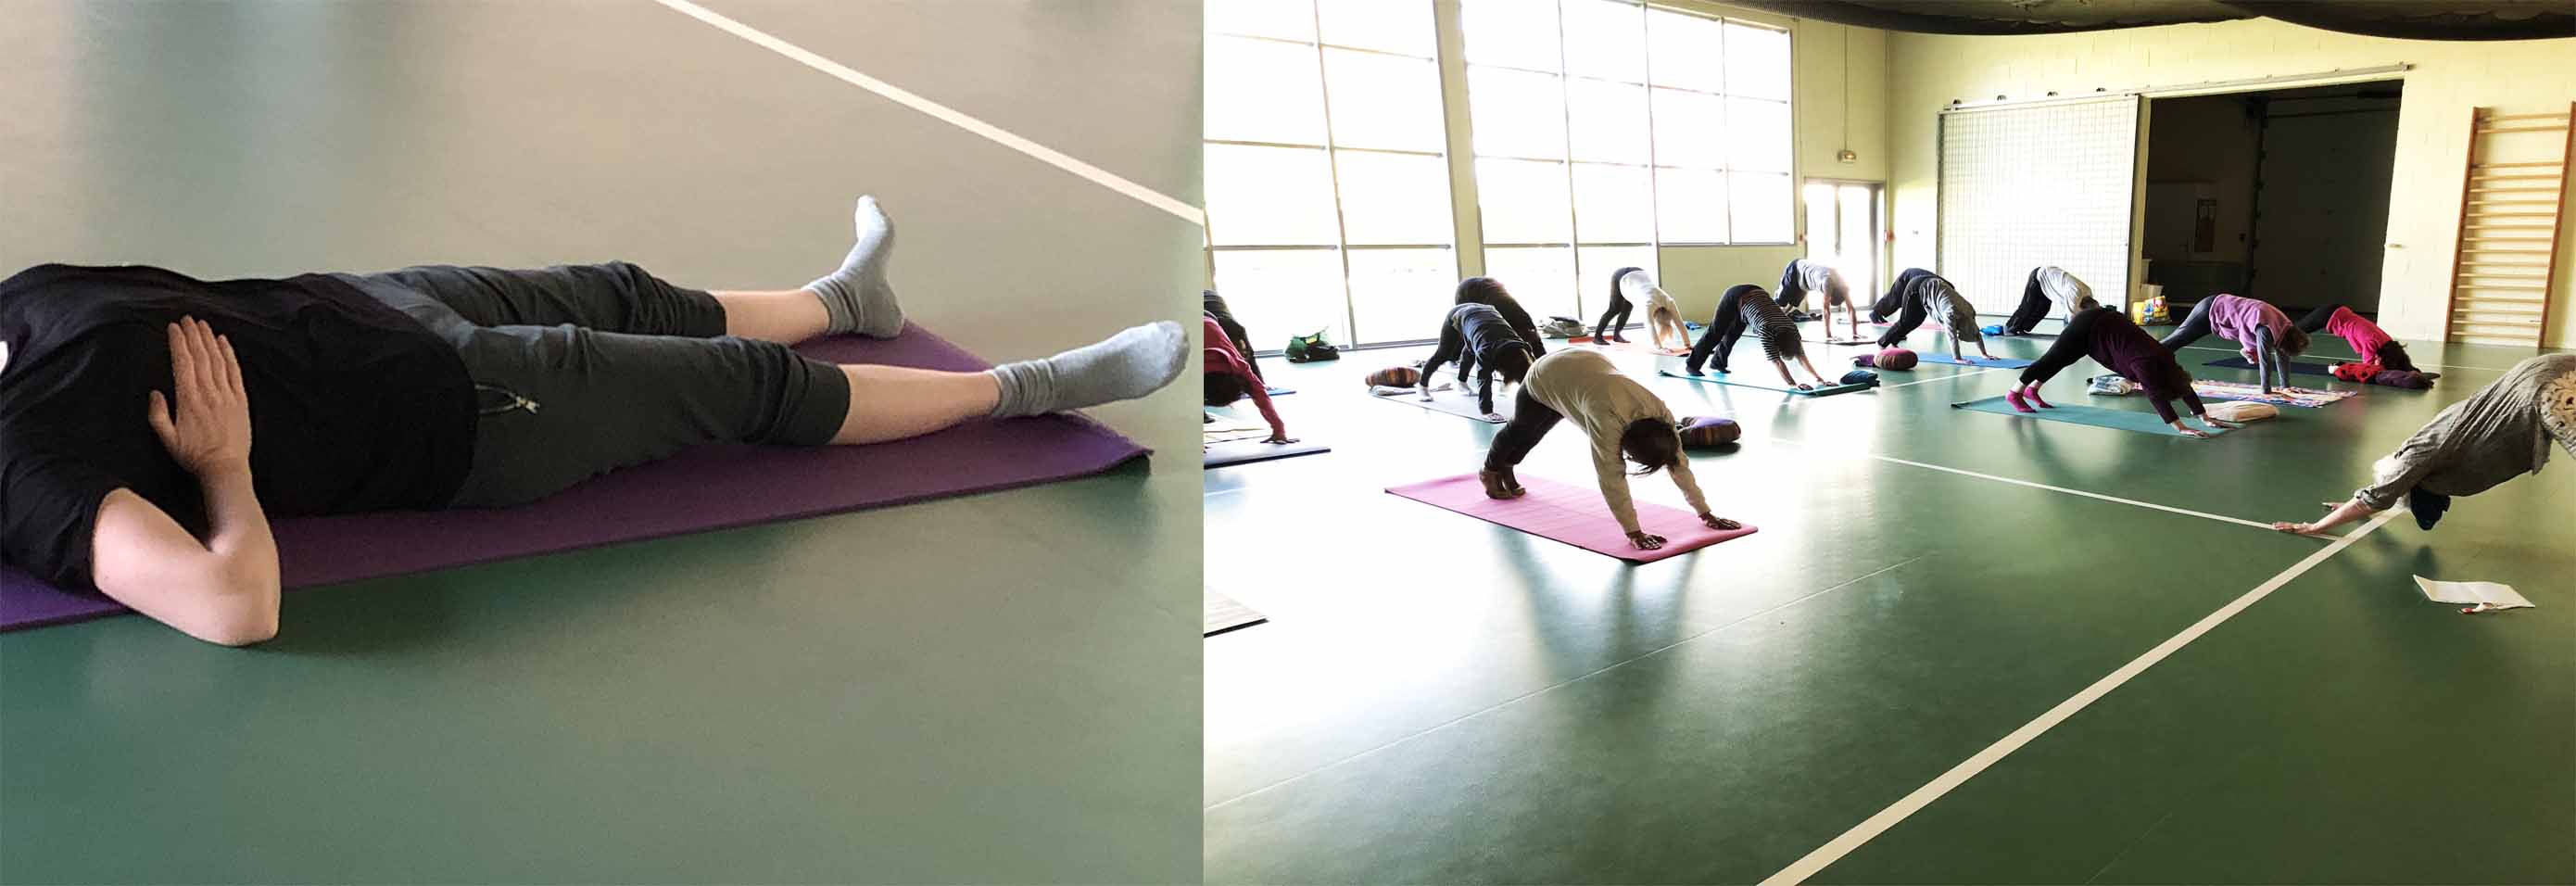 montage yoga